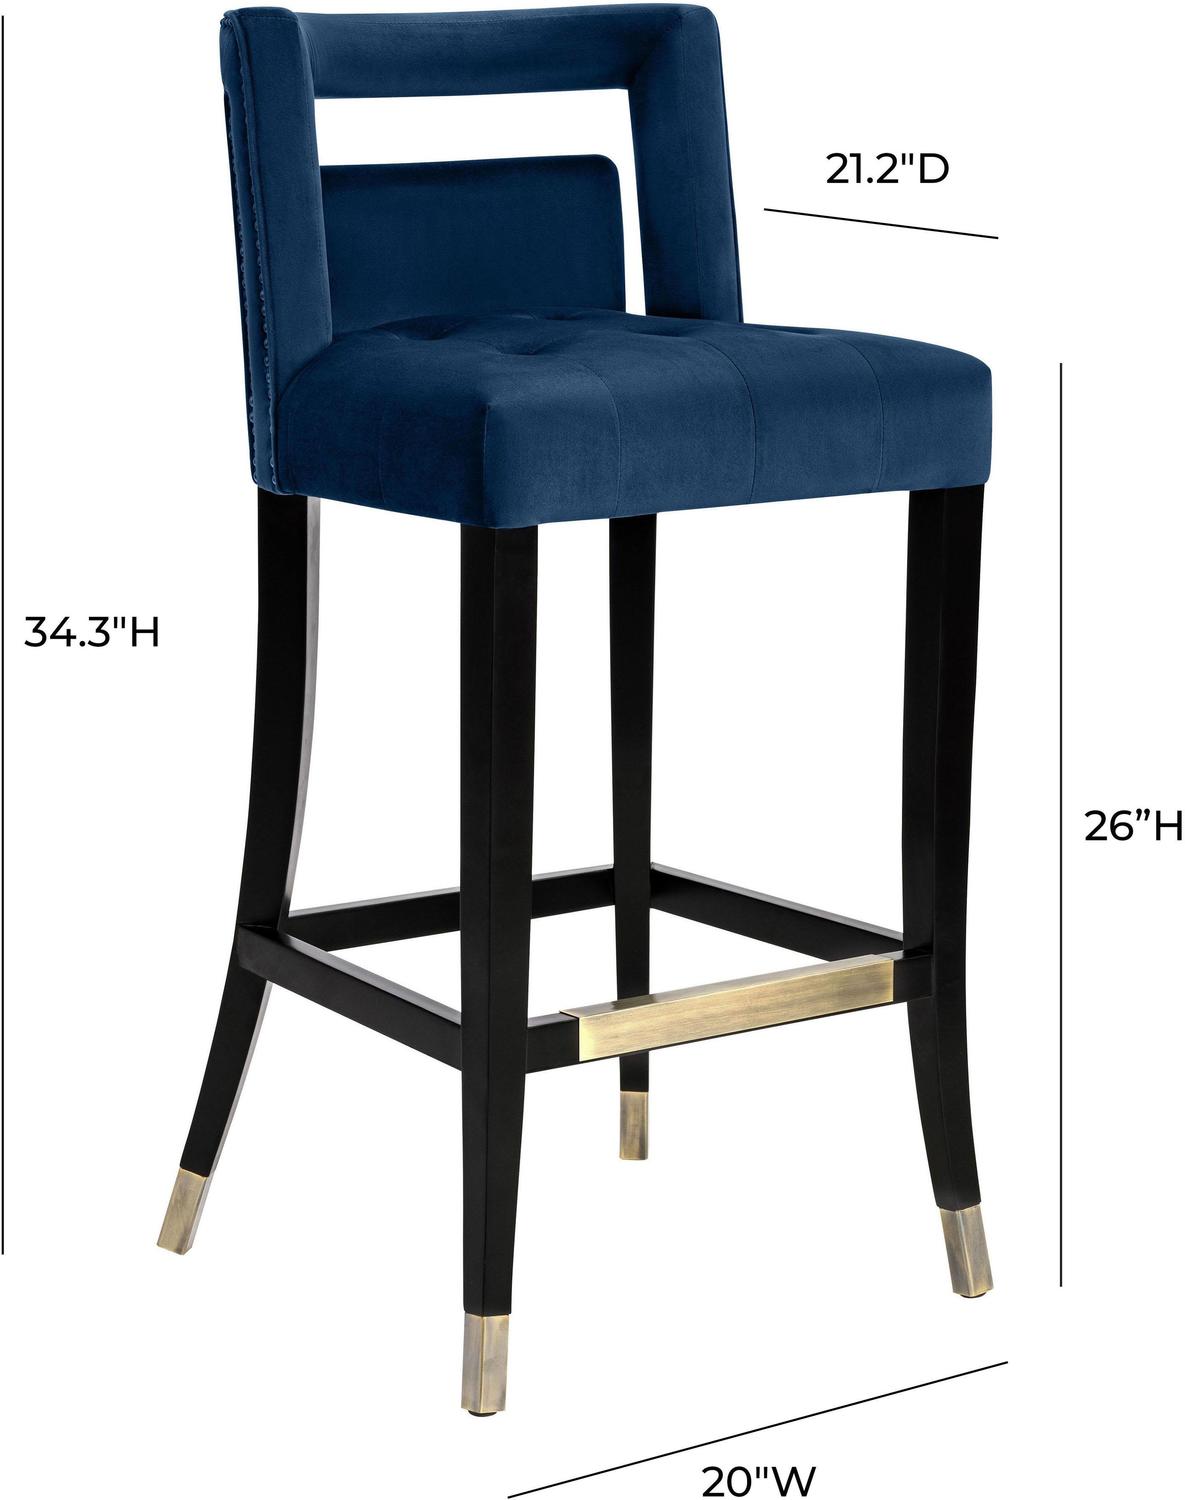 4 counter stools Tov Furniture Stools Navy